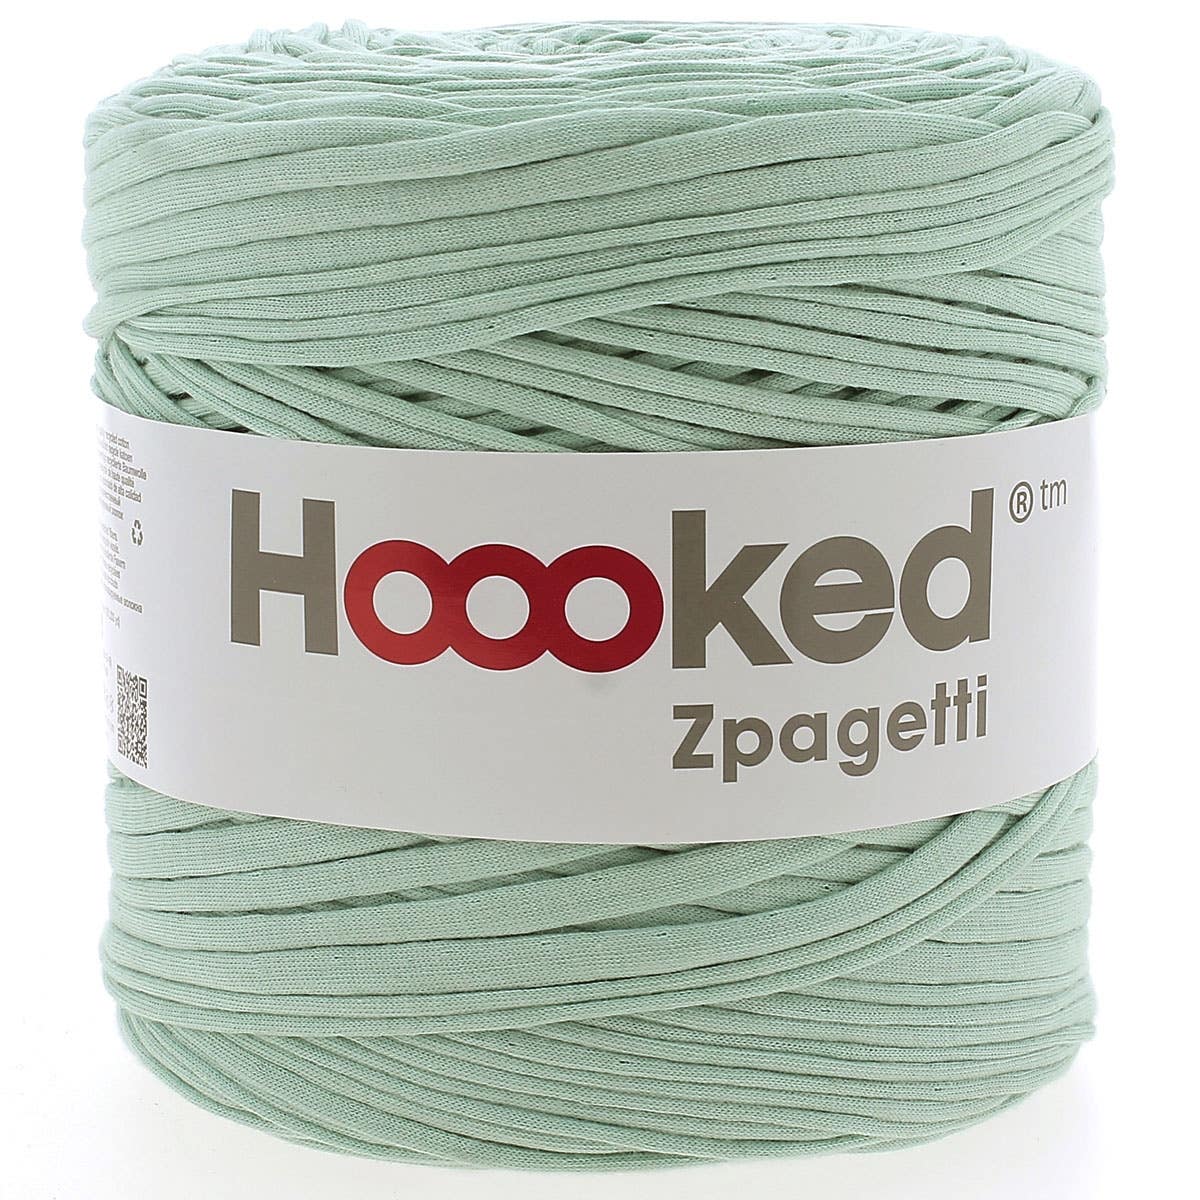 Hoooked Zpagetti - The Original T-shirt Yarn